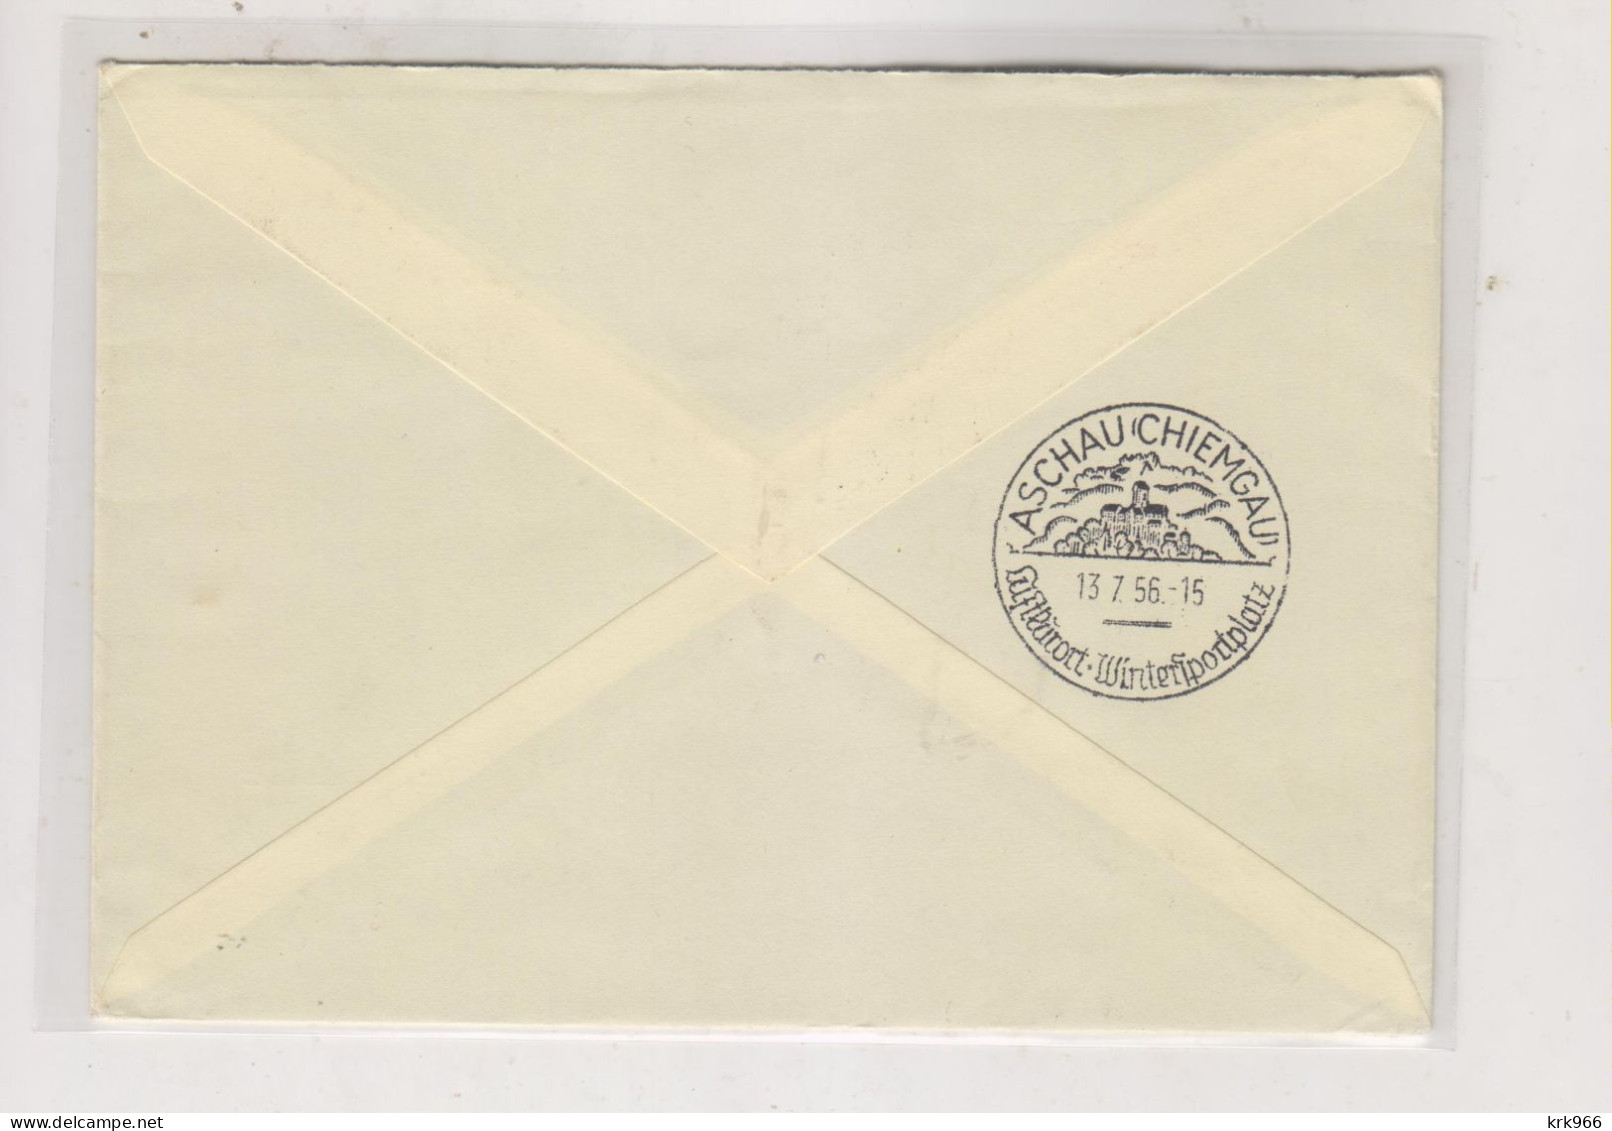 ICELAND 1954 SKALHOLT Registered FDC Cover To Germany - Lettres & Documents